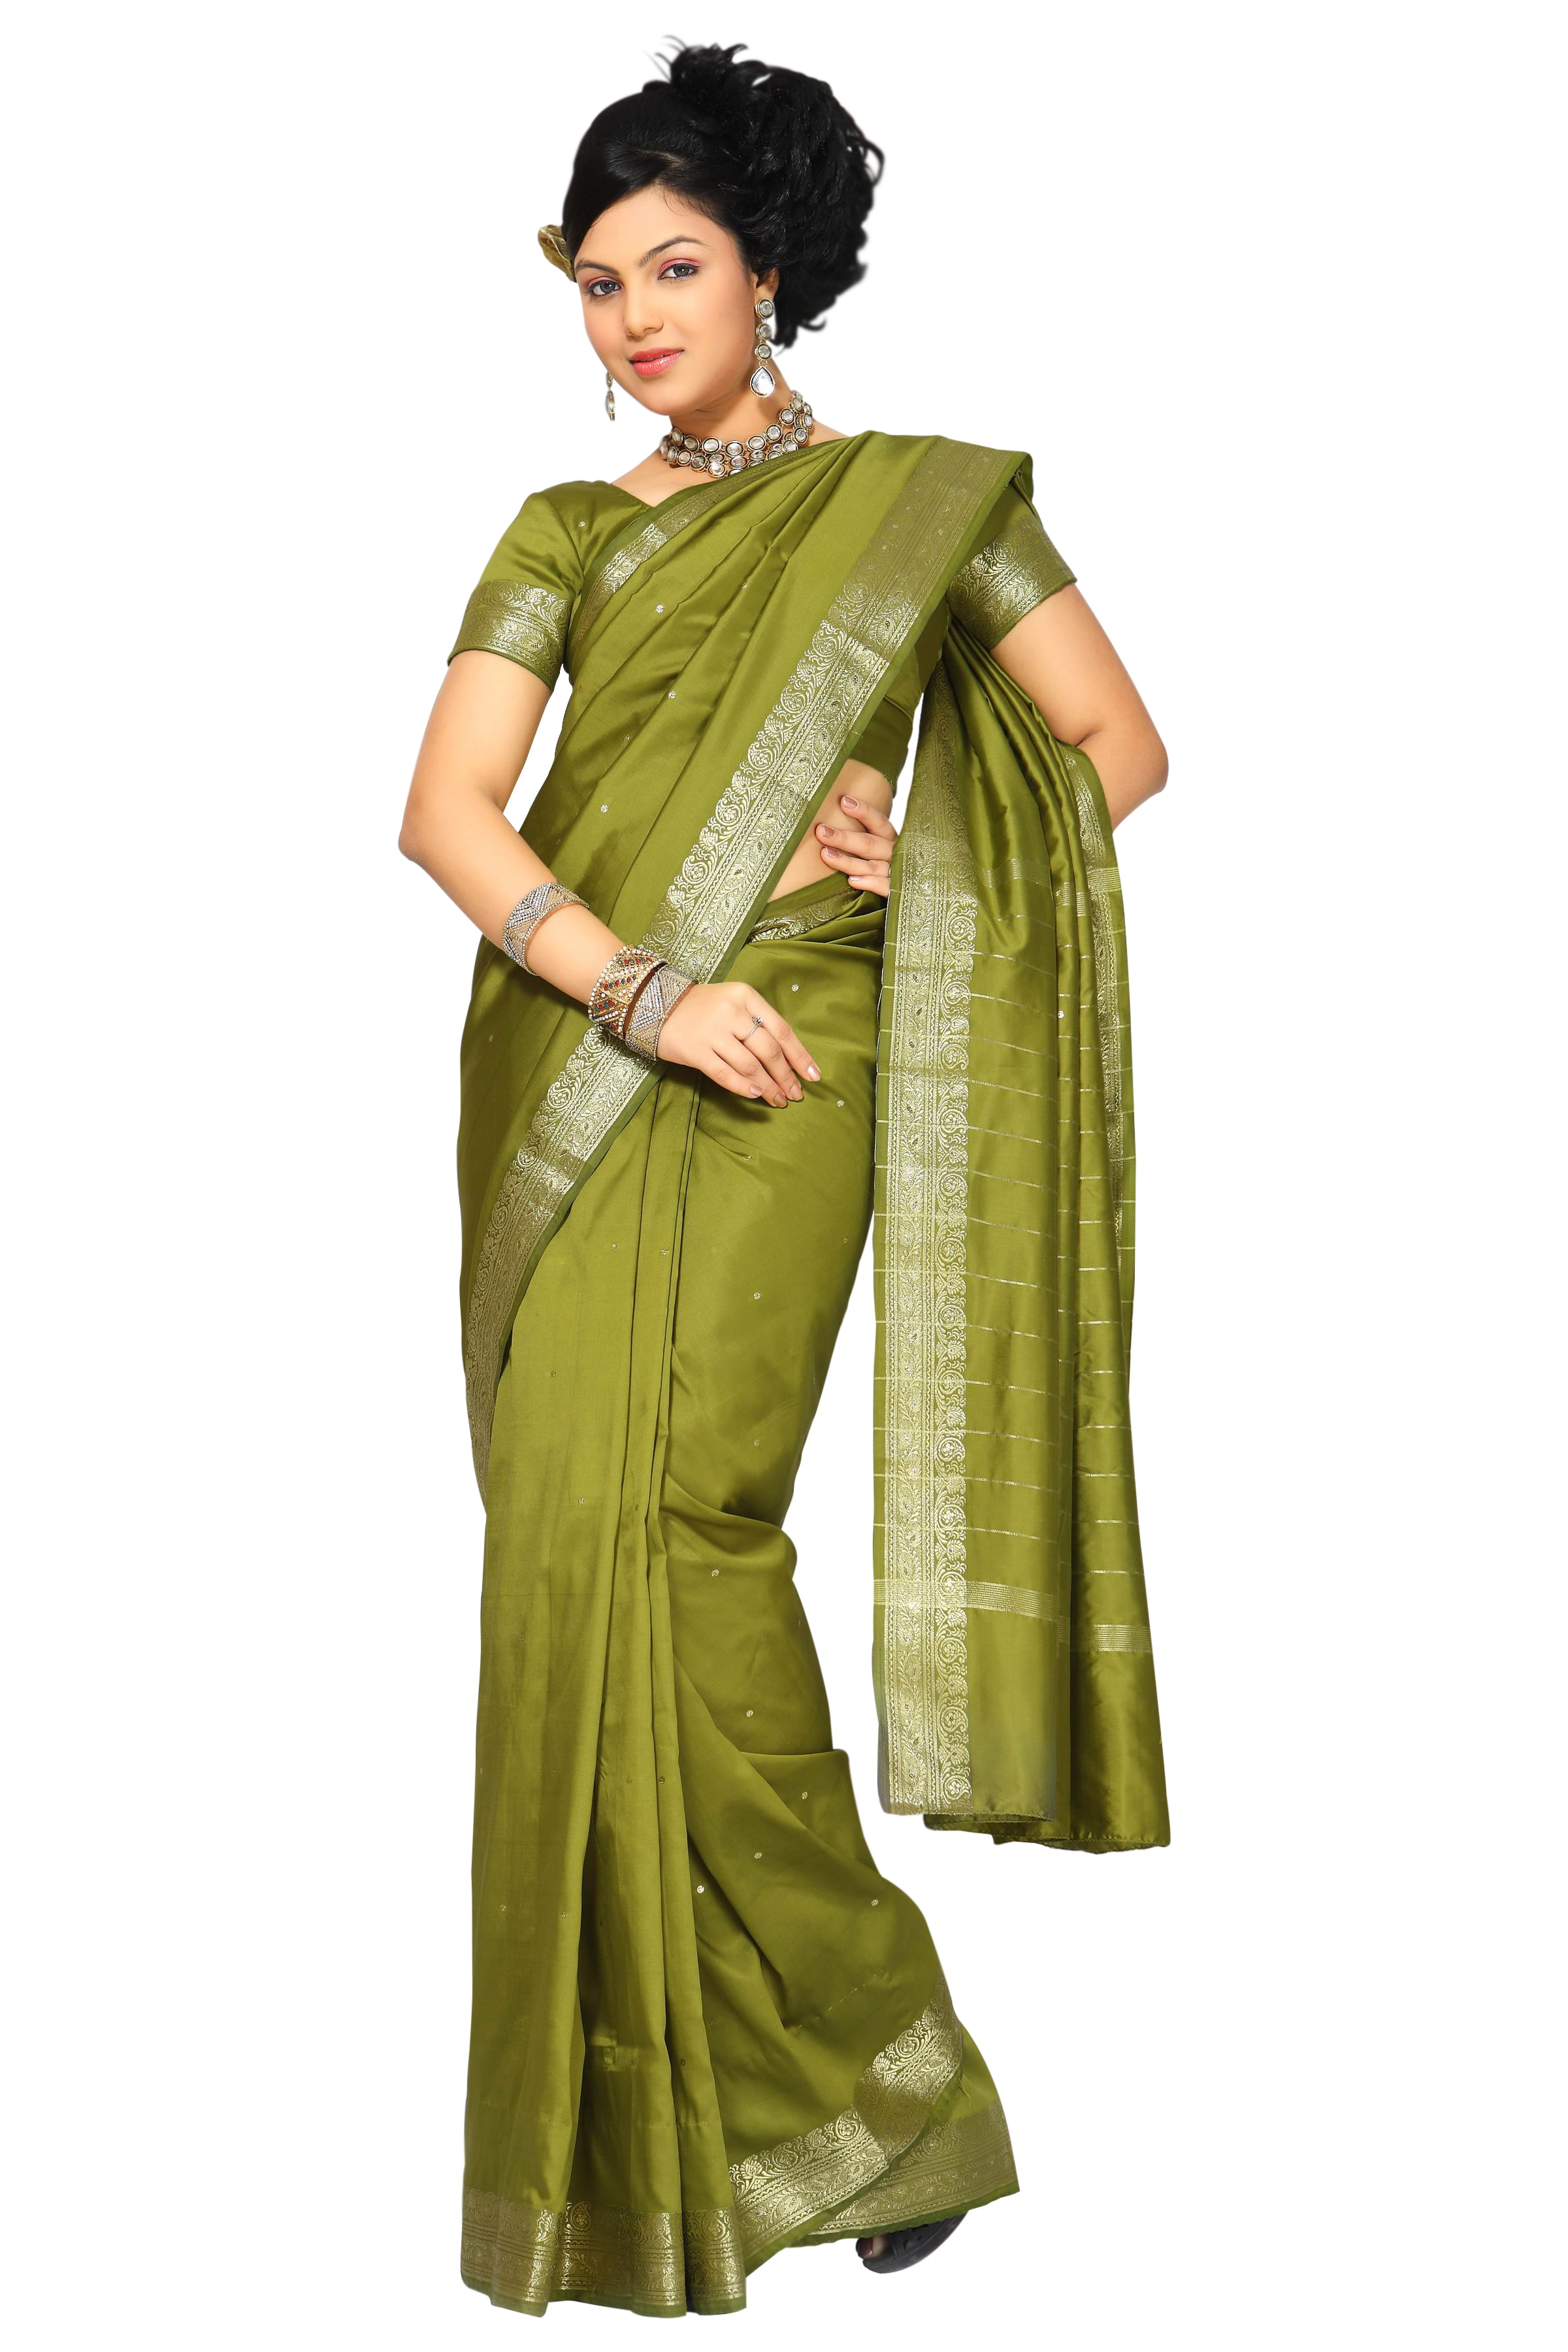 4 Piece Olive Green Art Silk Sari, Saree, Wrap, custom blouse, petticoat,  Bindi 